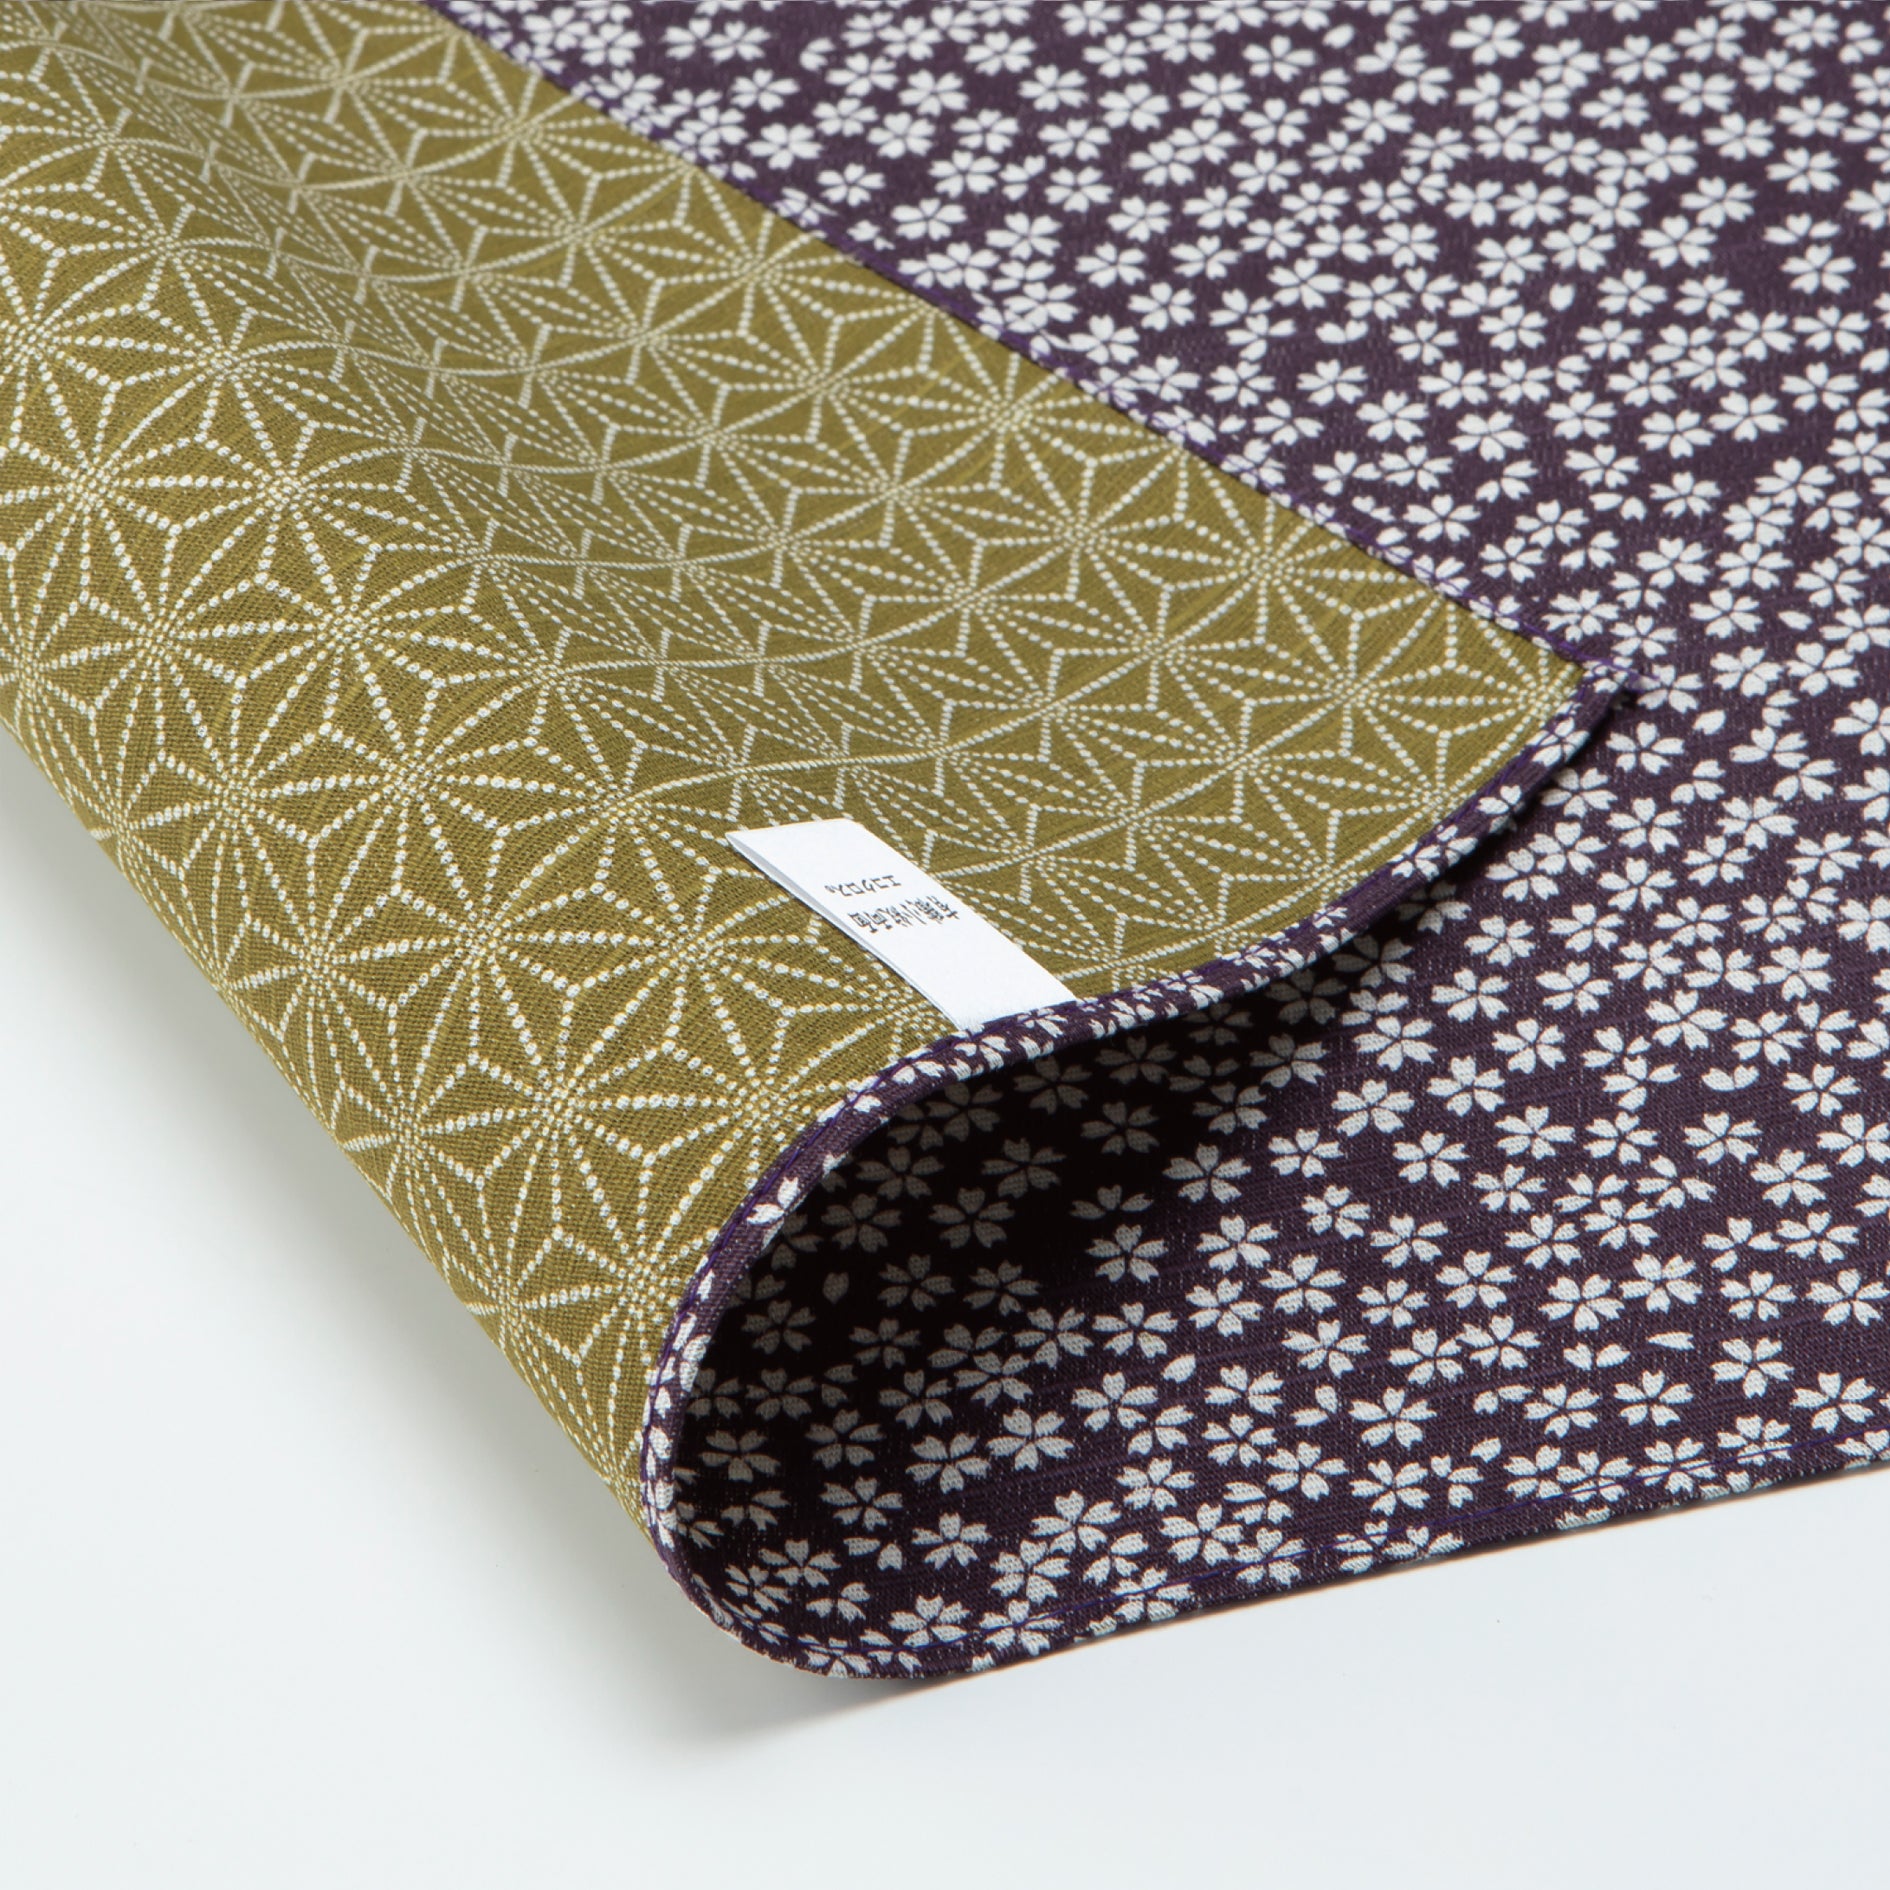 Double Sided Furoshiki Wrapping Cloth | Asanoha Sakura Purple & Green by Sanyo Shoji - Bento&co Japanese Bento Lunch Boxes and Kitchenware Specialists